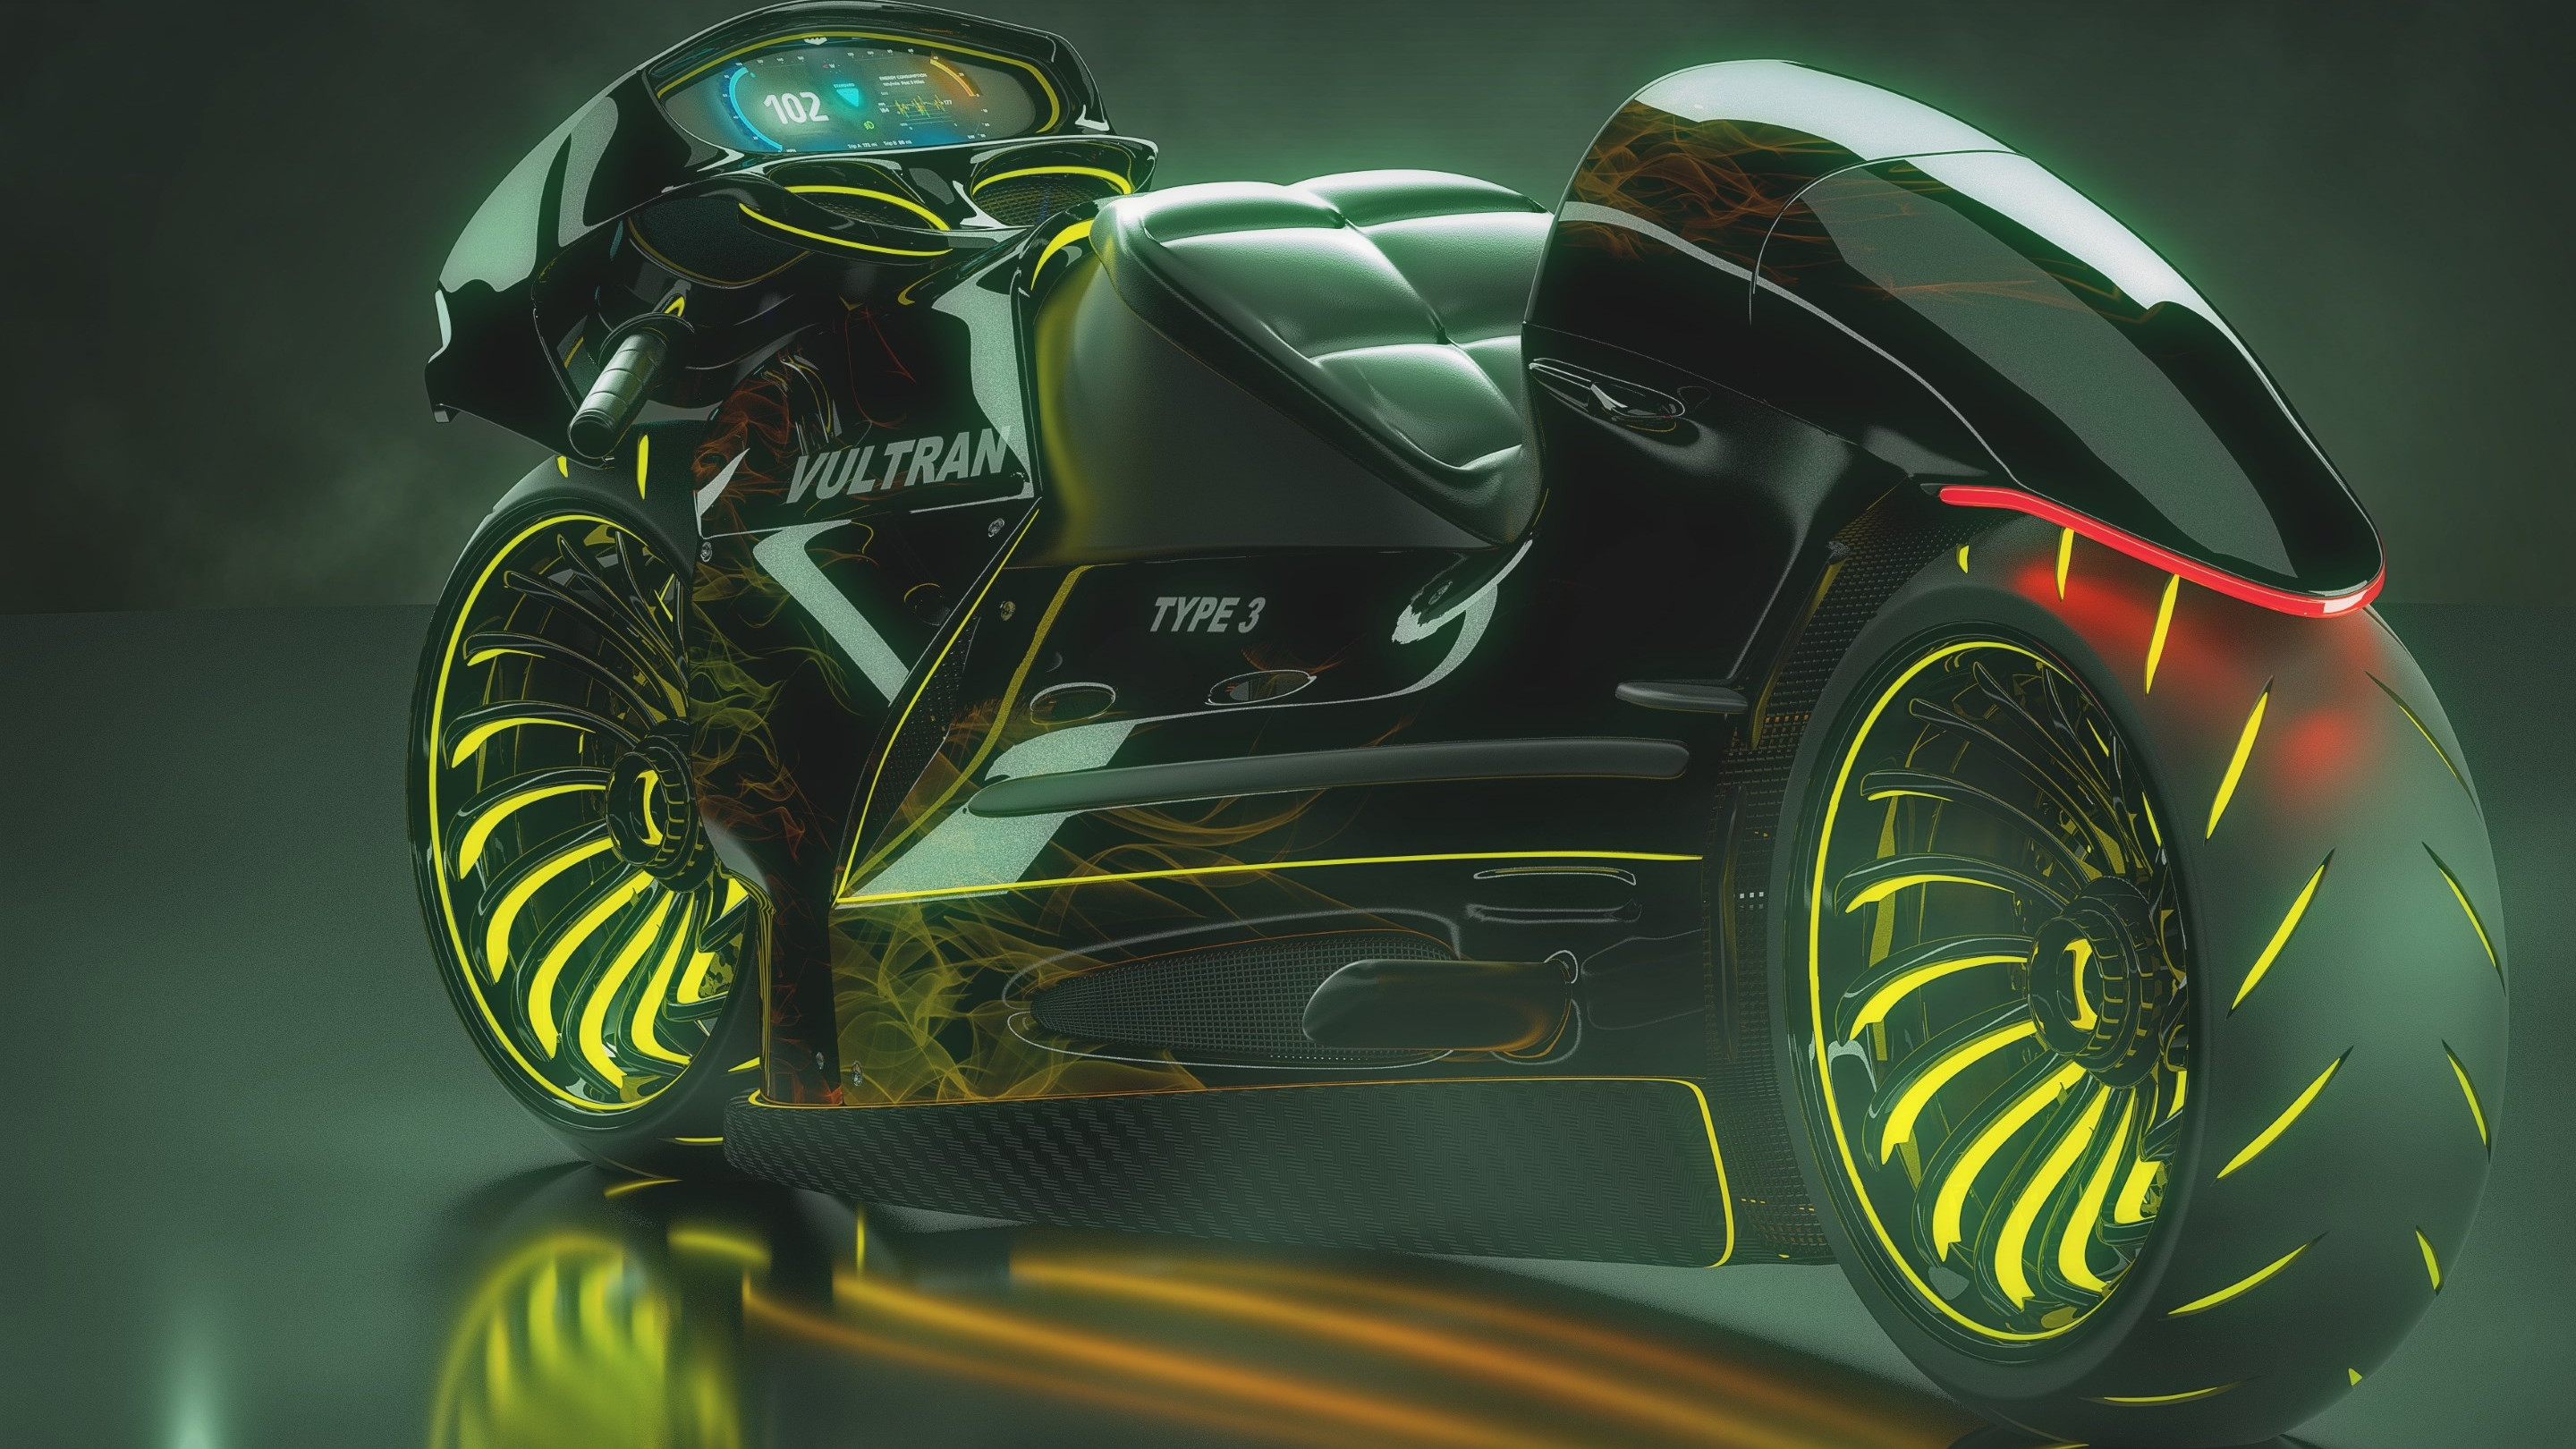 Download wallpaper: 3D motorcycle concept 2880x1620